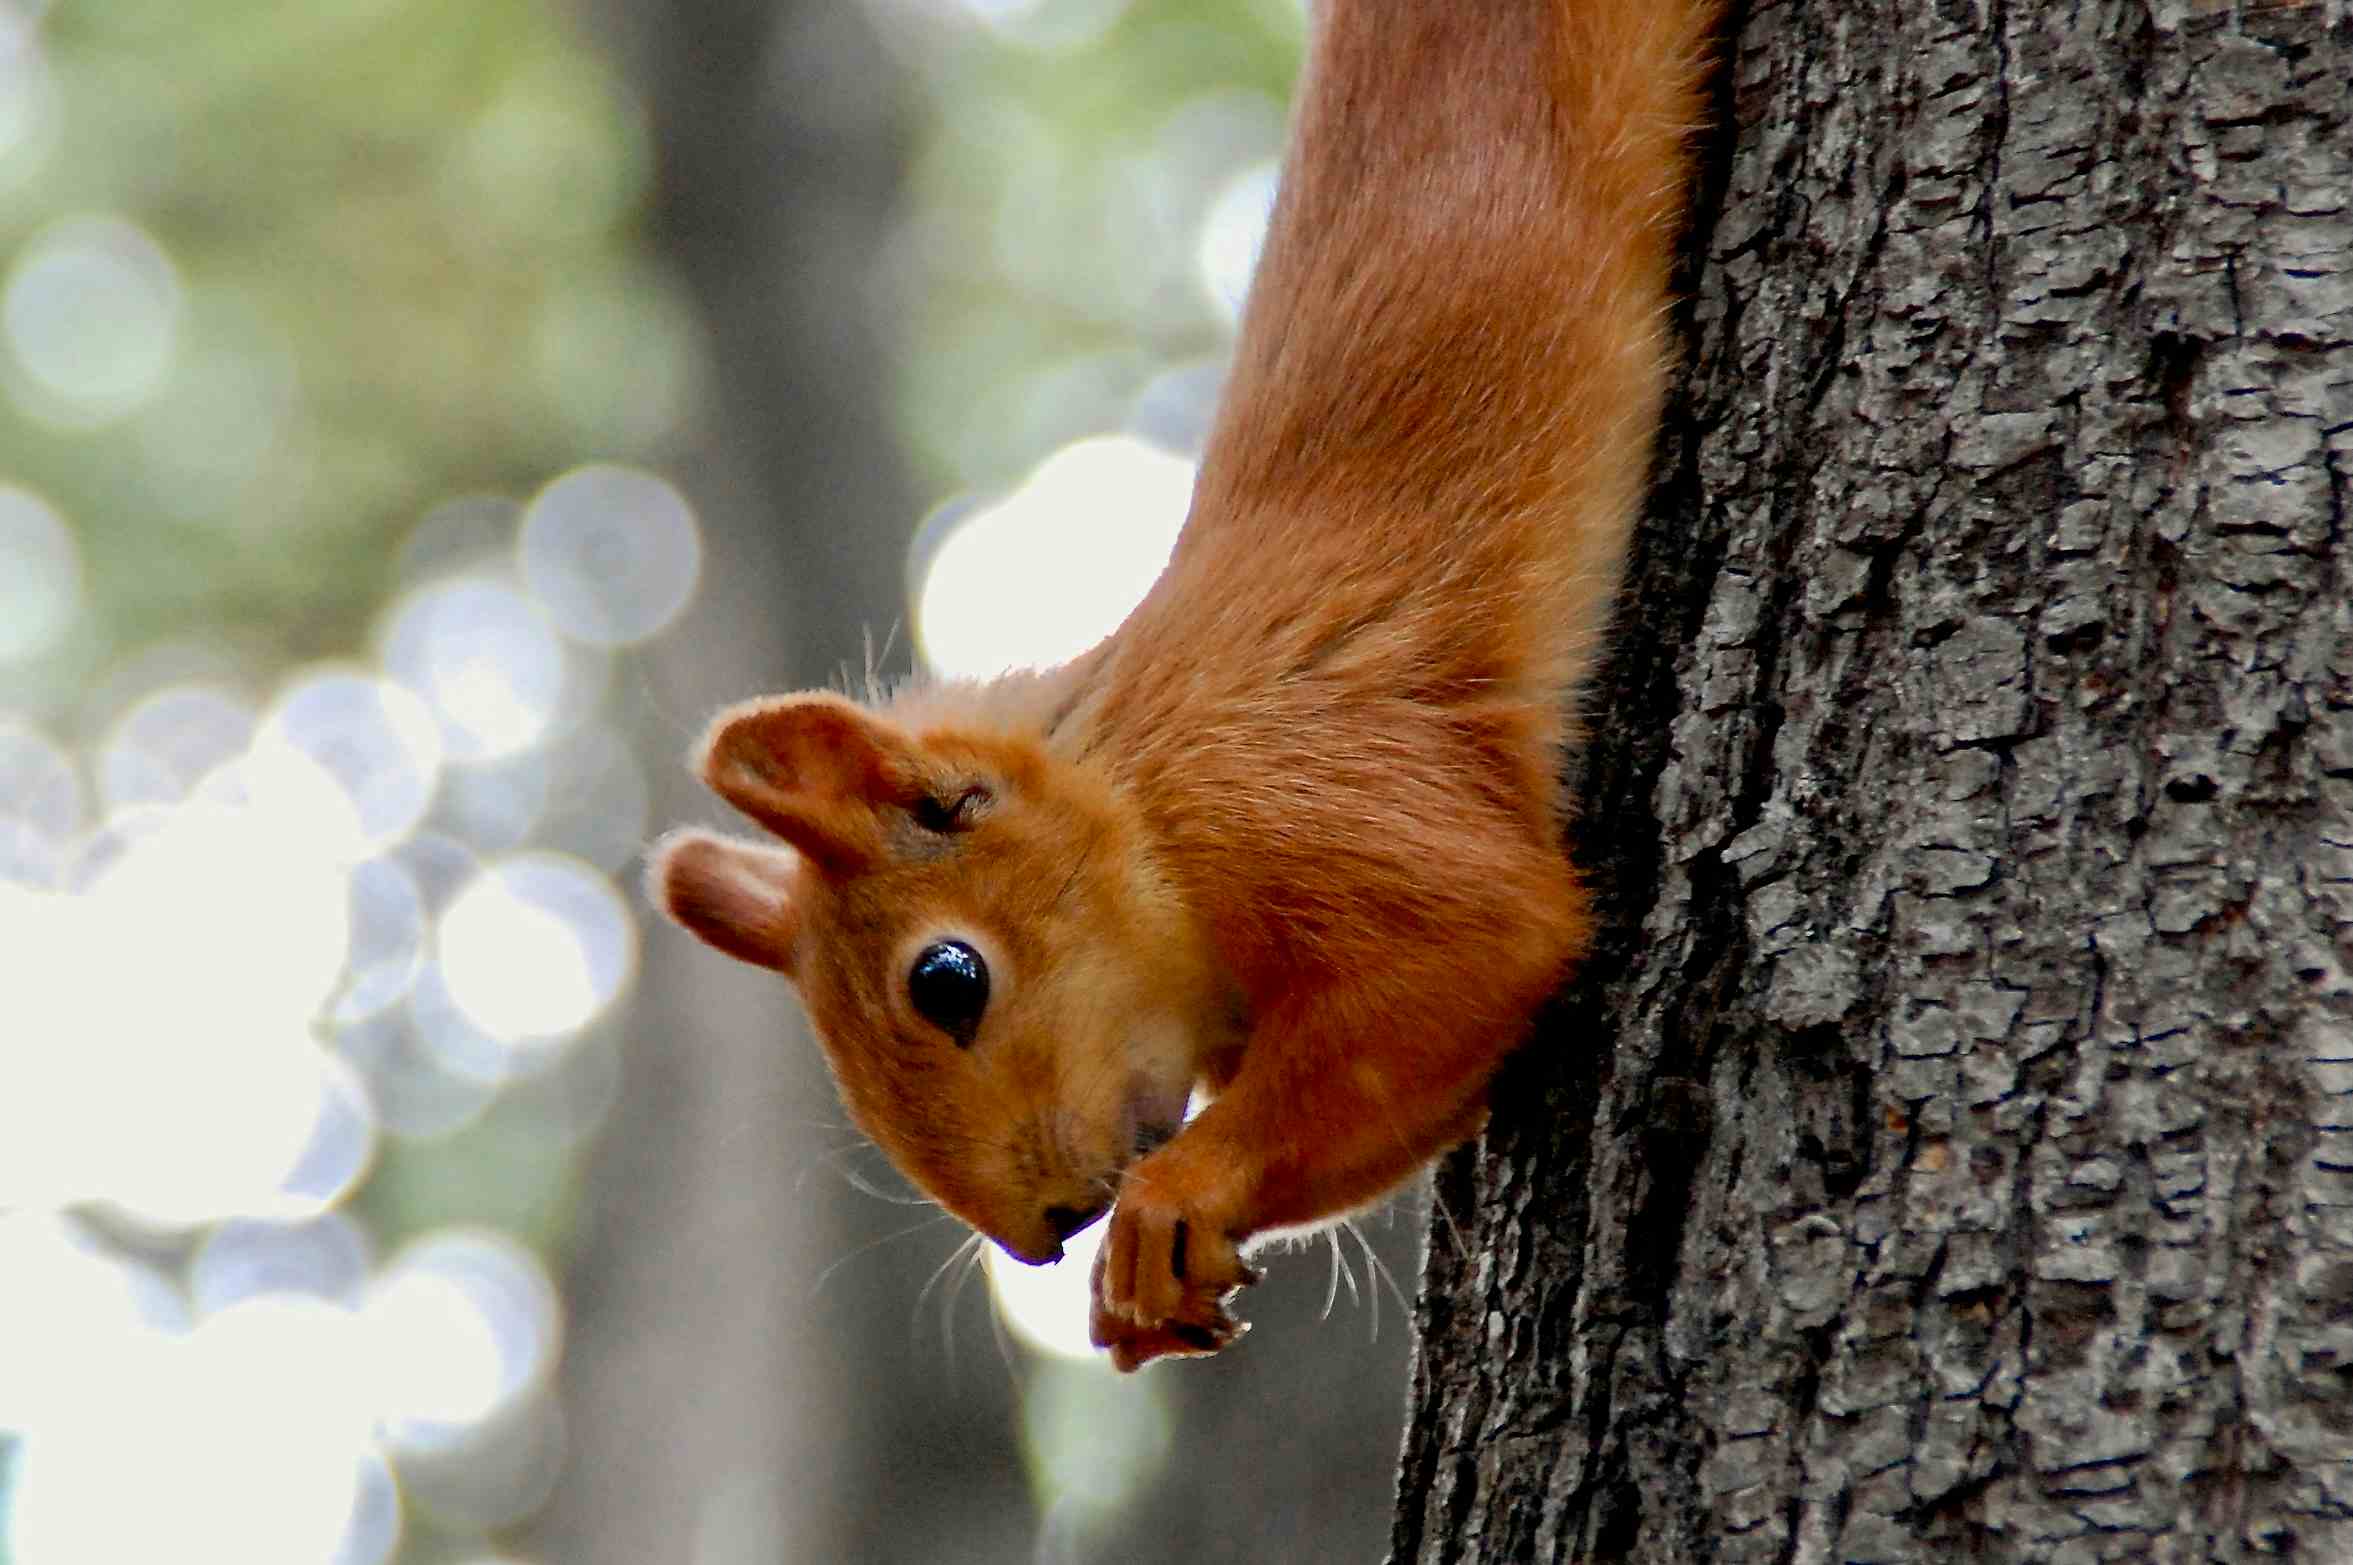 Zahme Eichhörnchen im Gorki Park